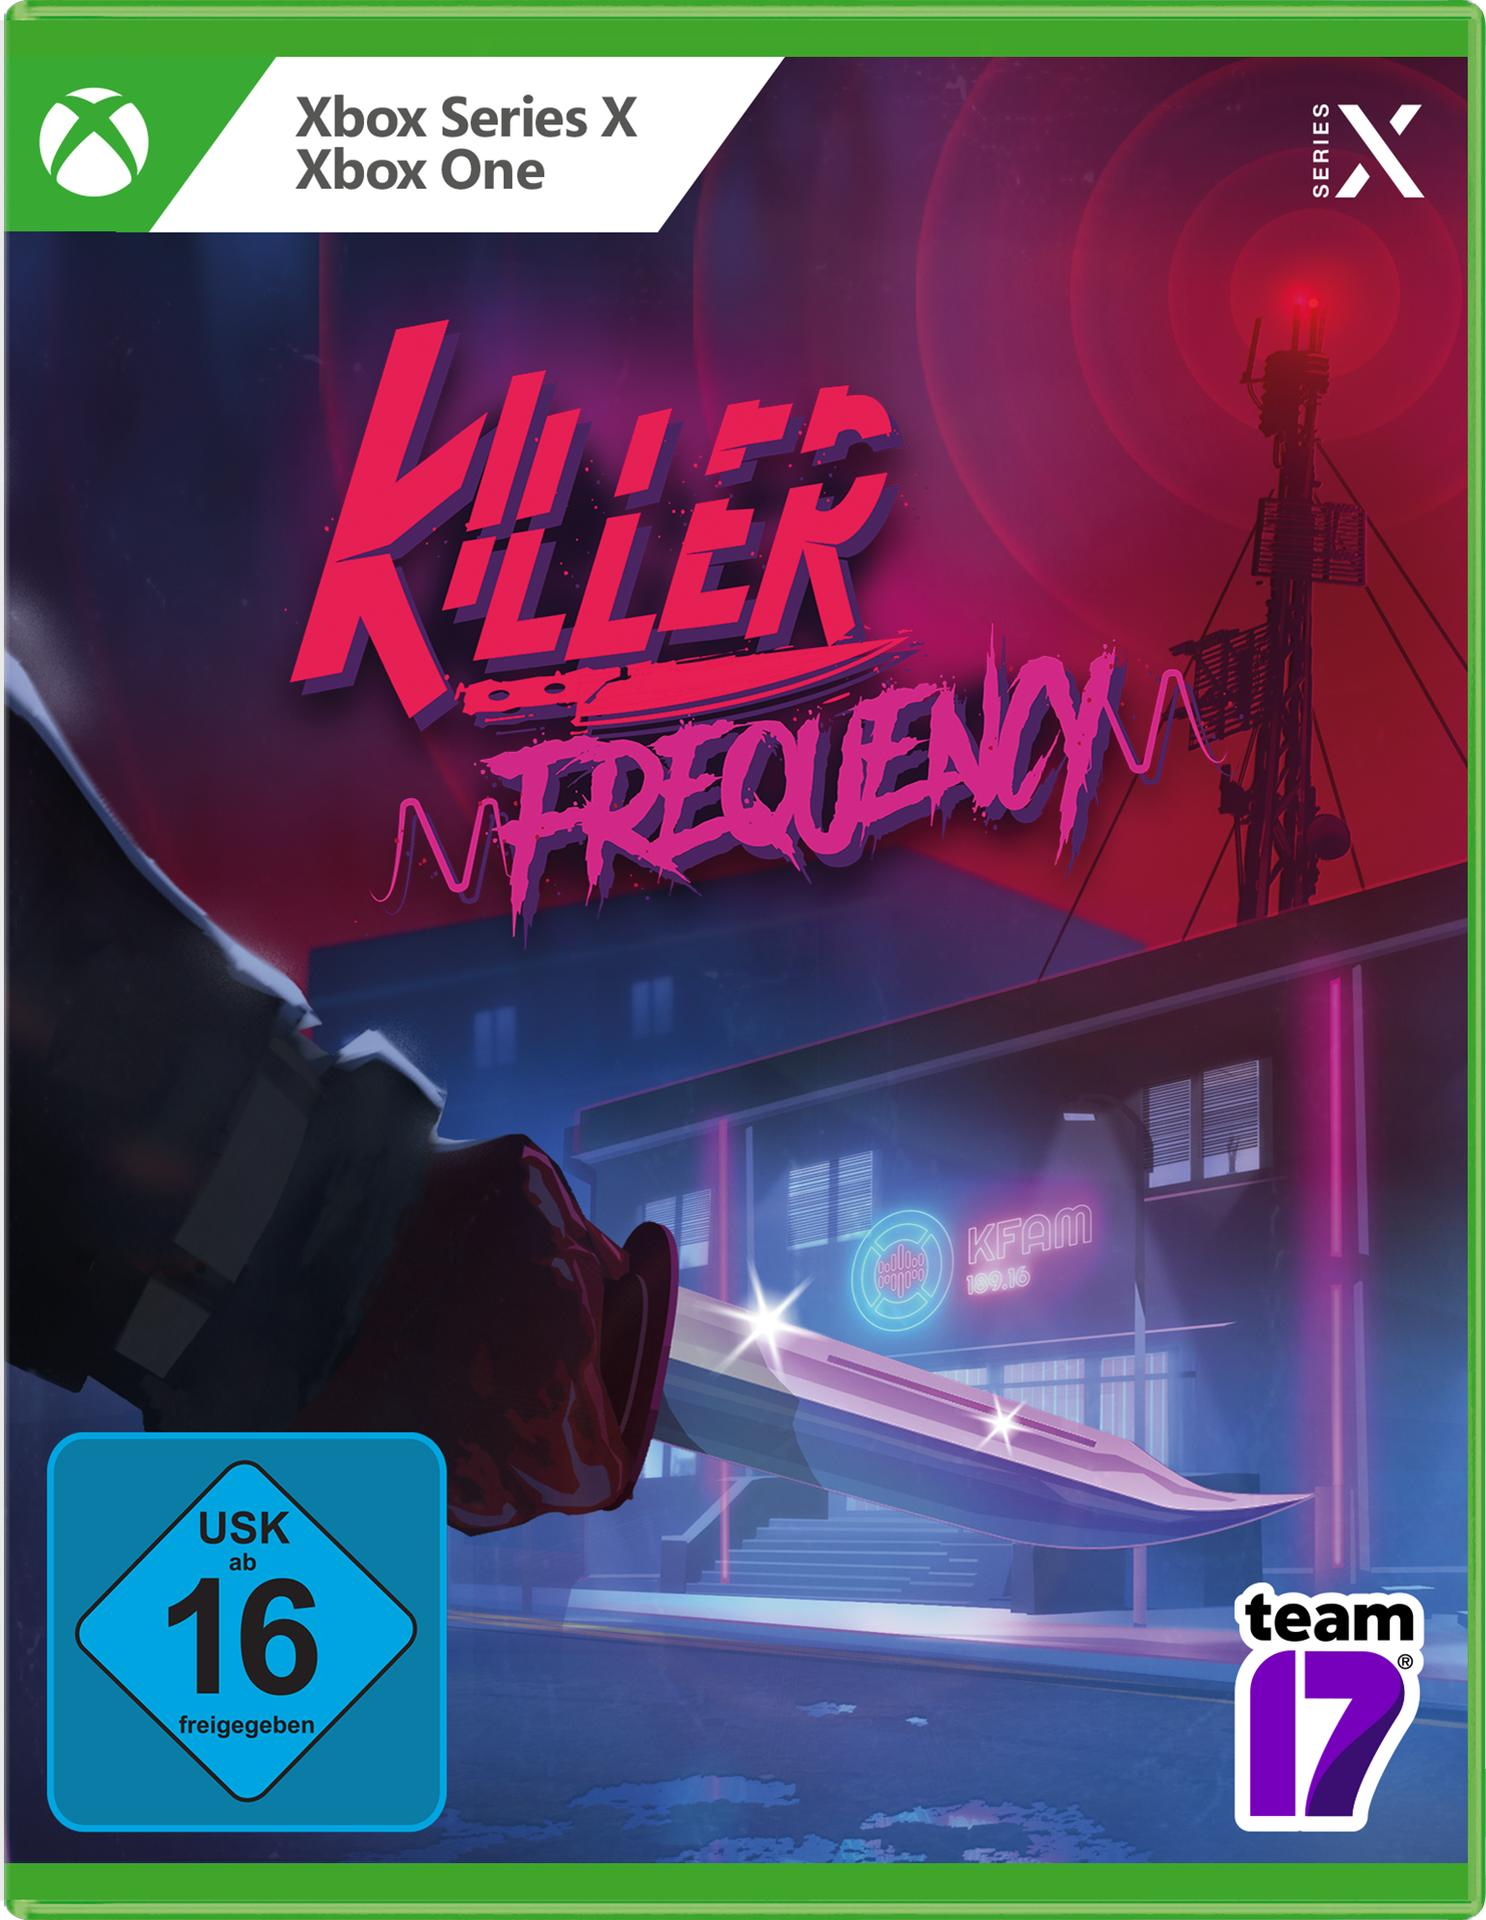 One [Xbox Series X] & Frequency - Xbox Killer